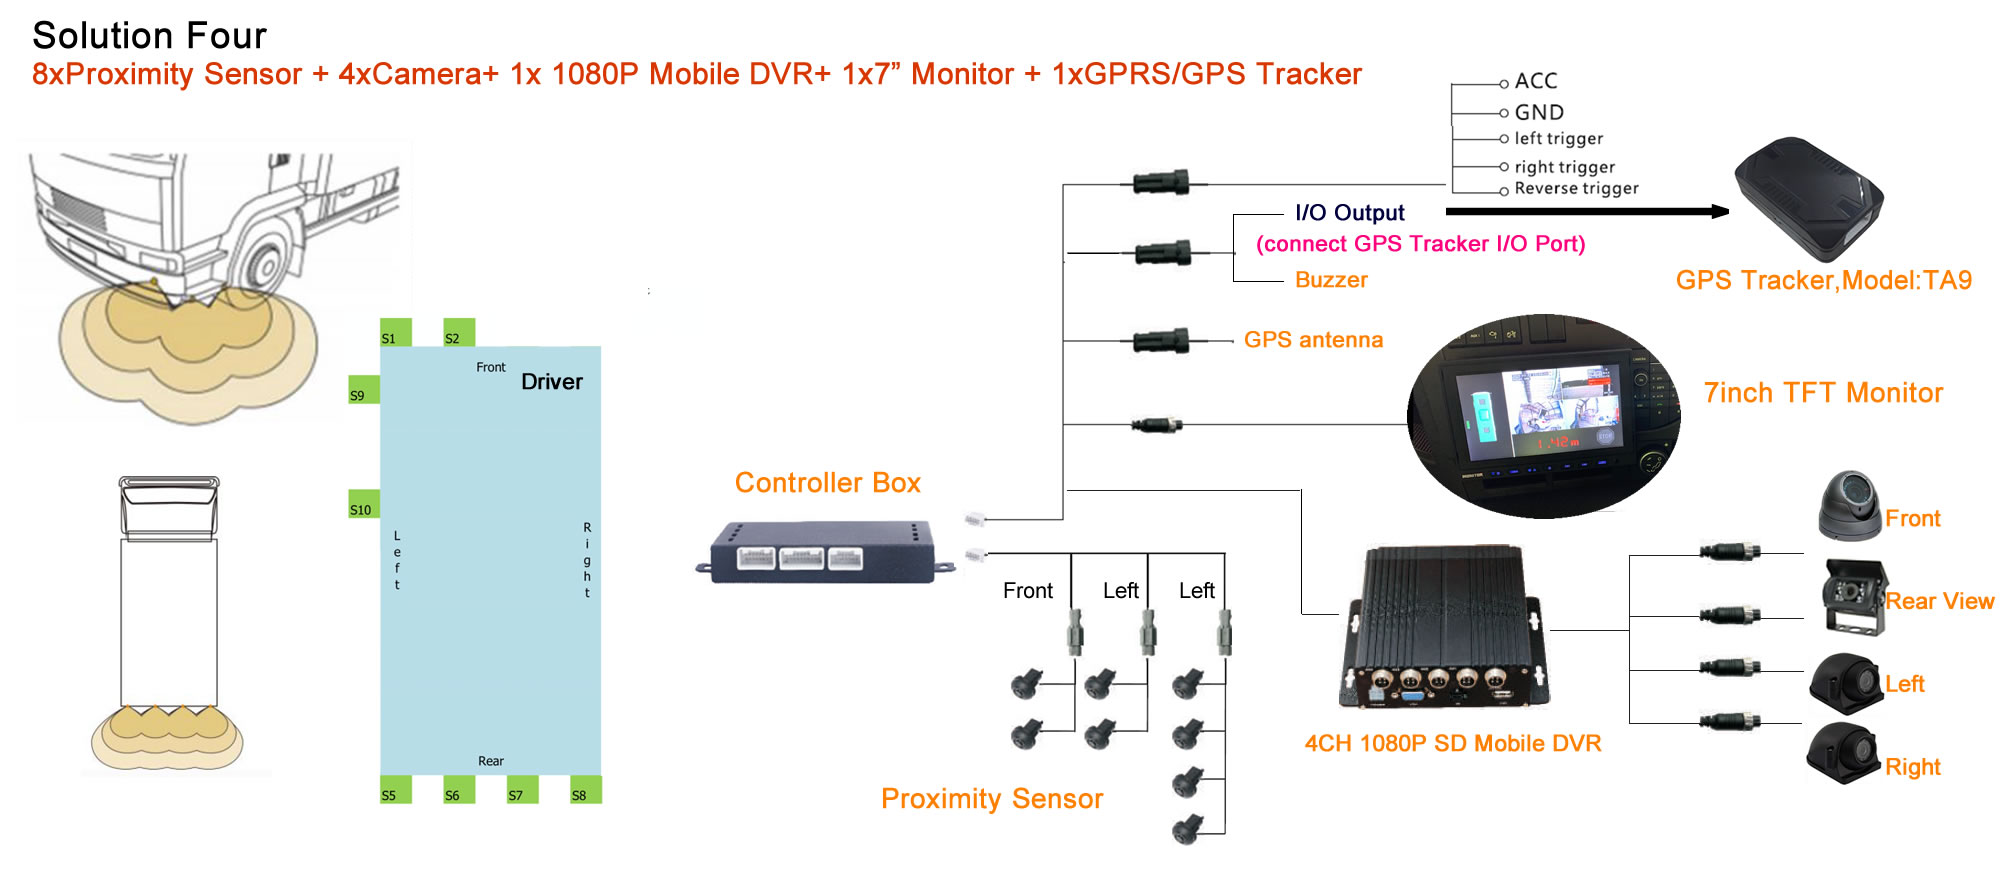 Demo Solution 4 Parking Sensor with opitonal GPS Tracker Mobile DVR Camera.jpg